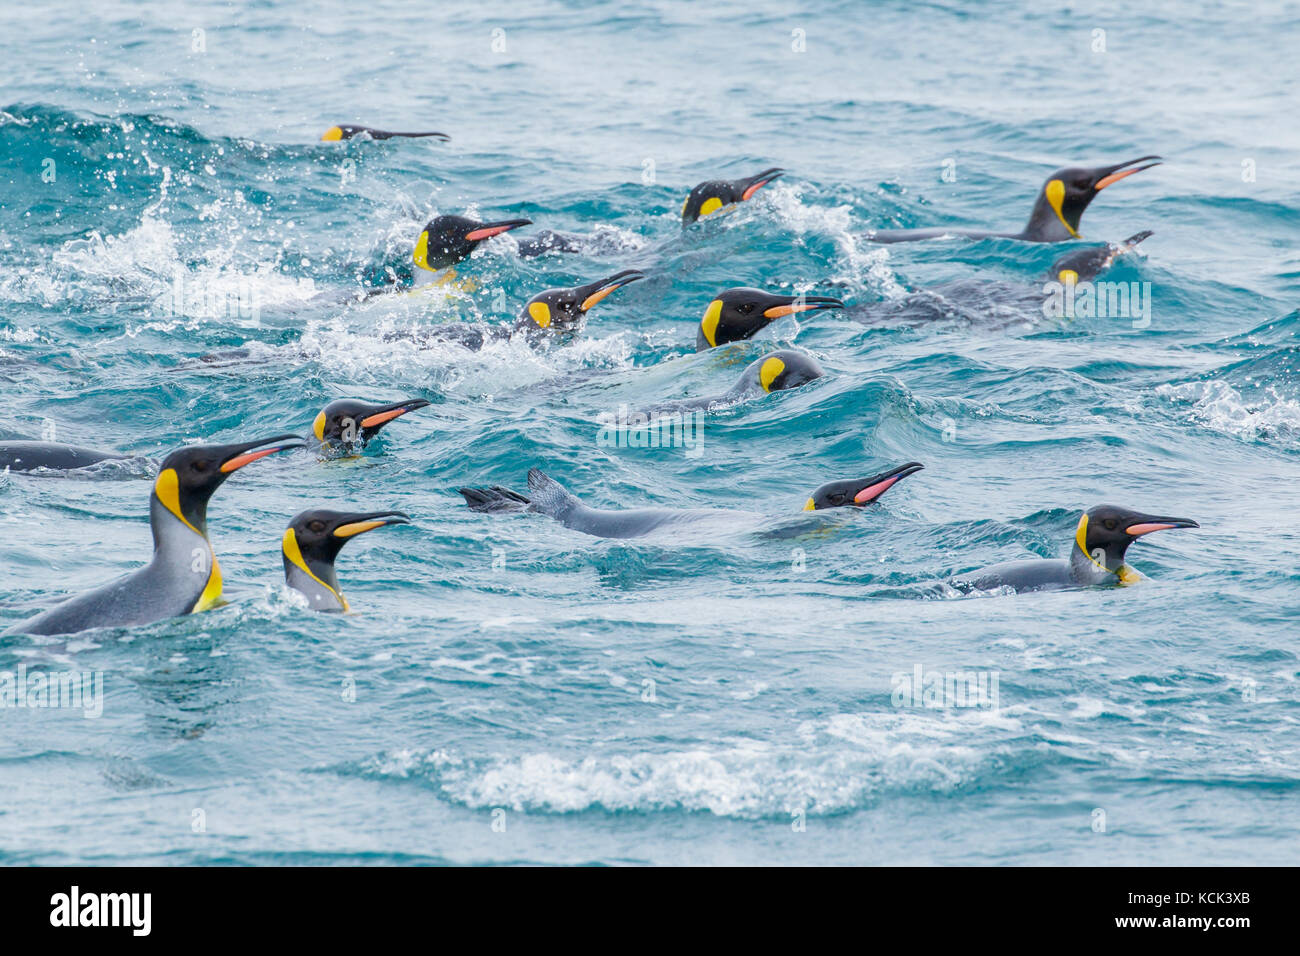 King Penguin (Aptenodytes patagonicus) swimming in the ocean near South Georgia Island. Stock Photo